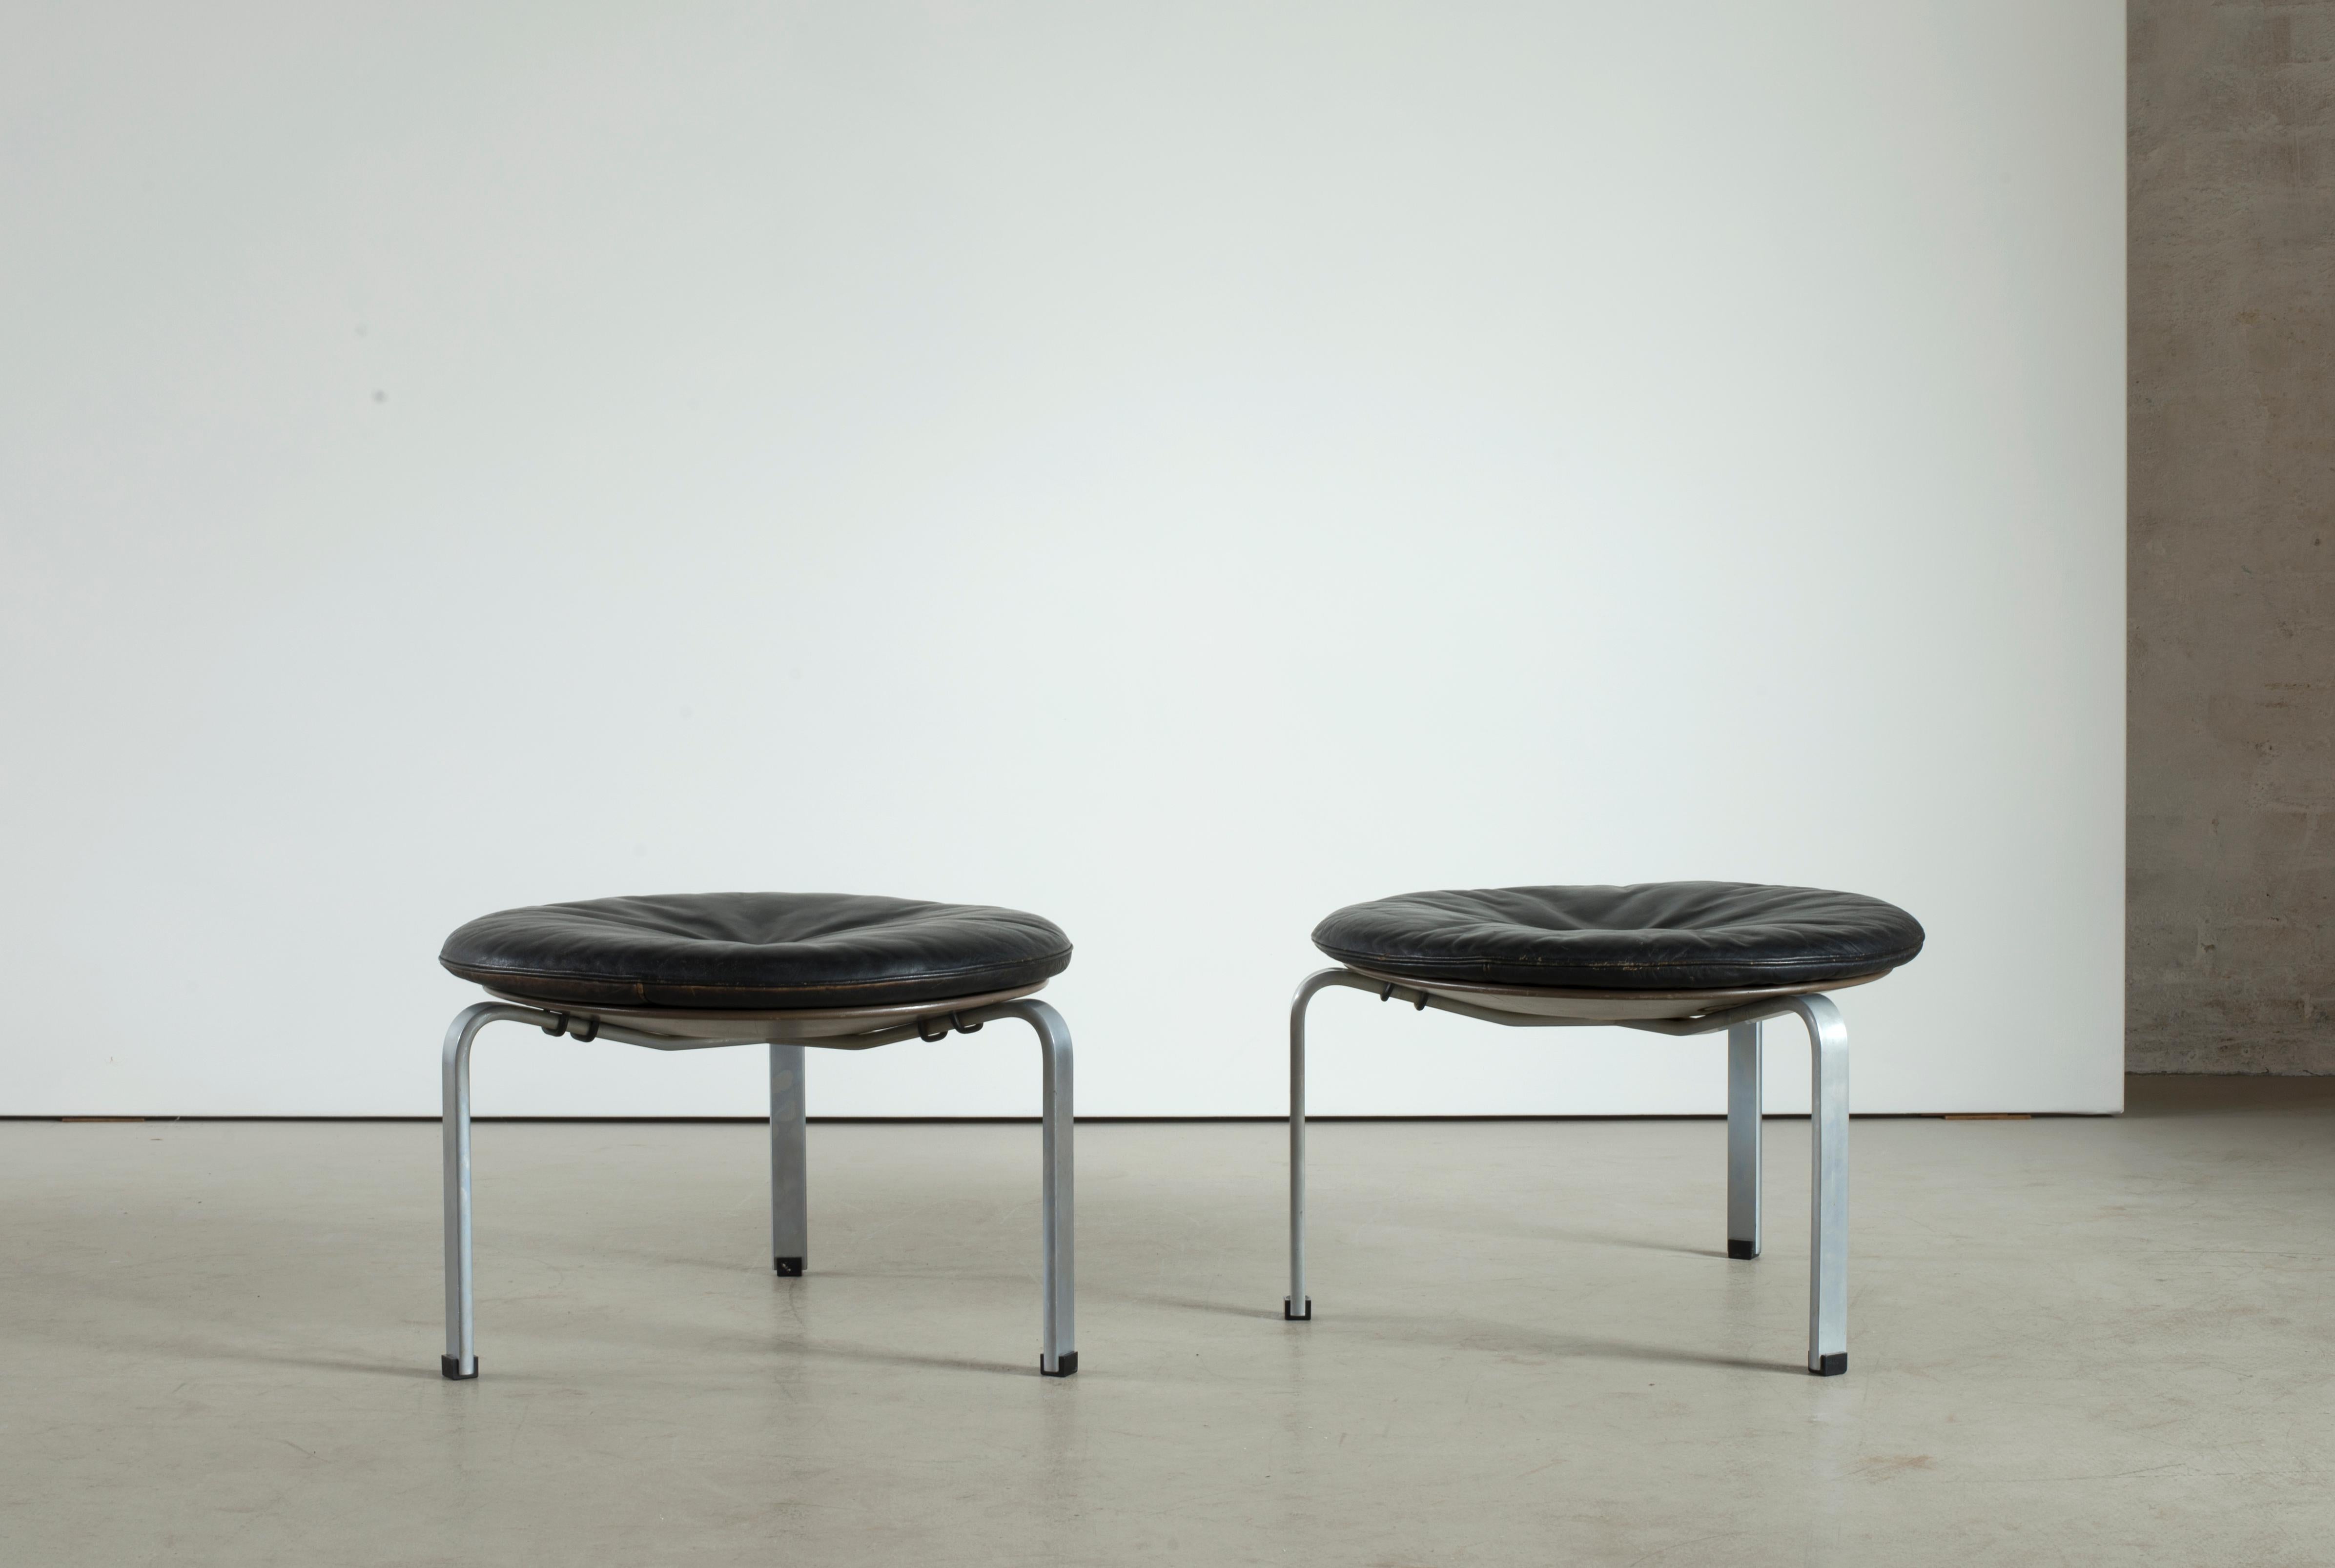 Poul Kjaerholm pair of PK33 stools, dull chromium-plated steel and oxide. Executed by E. Kold Christensen, Denmark.